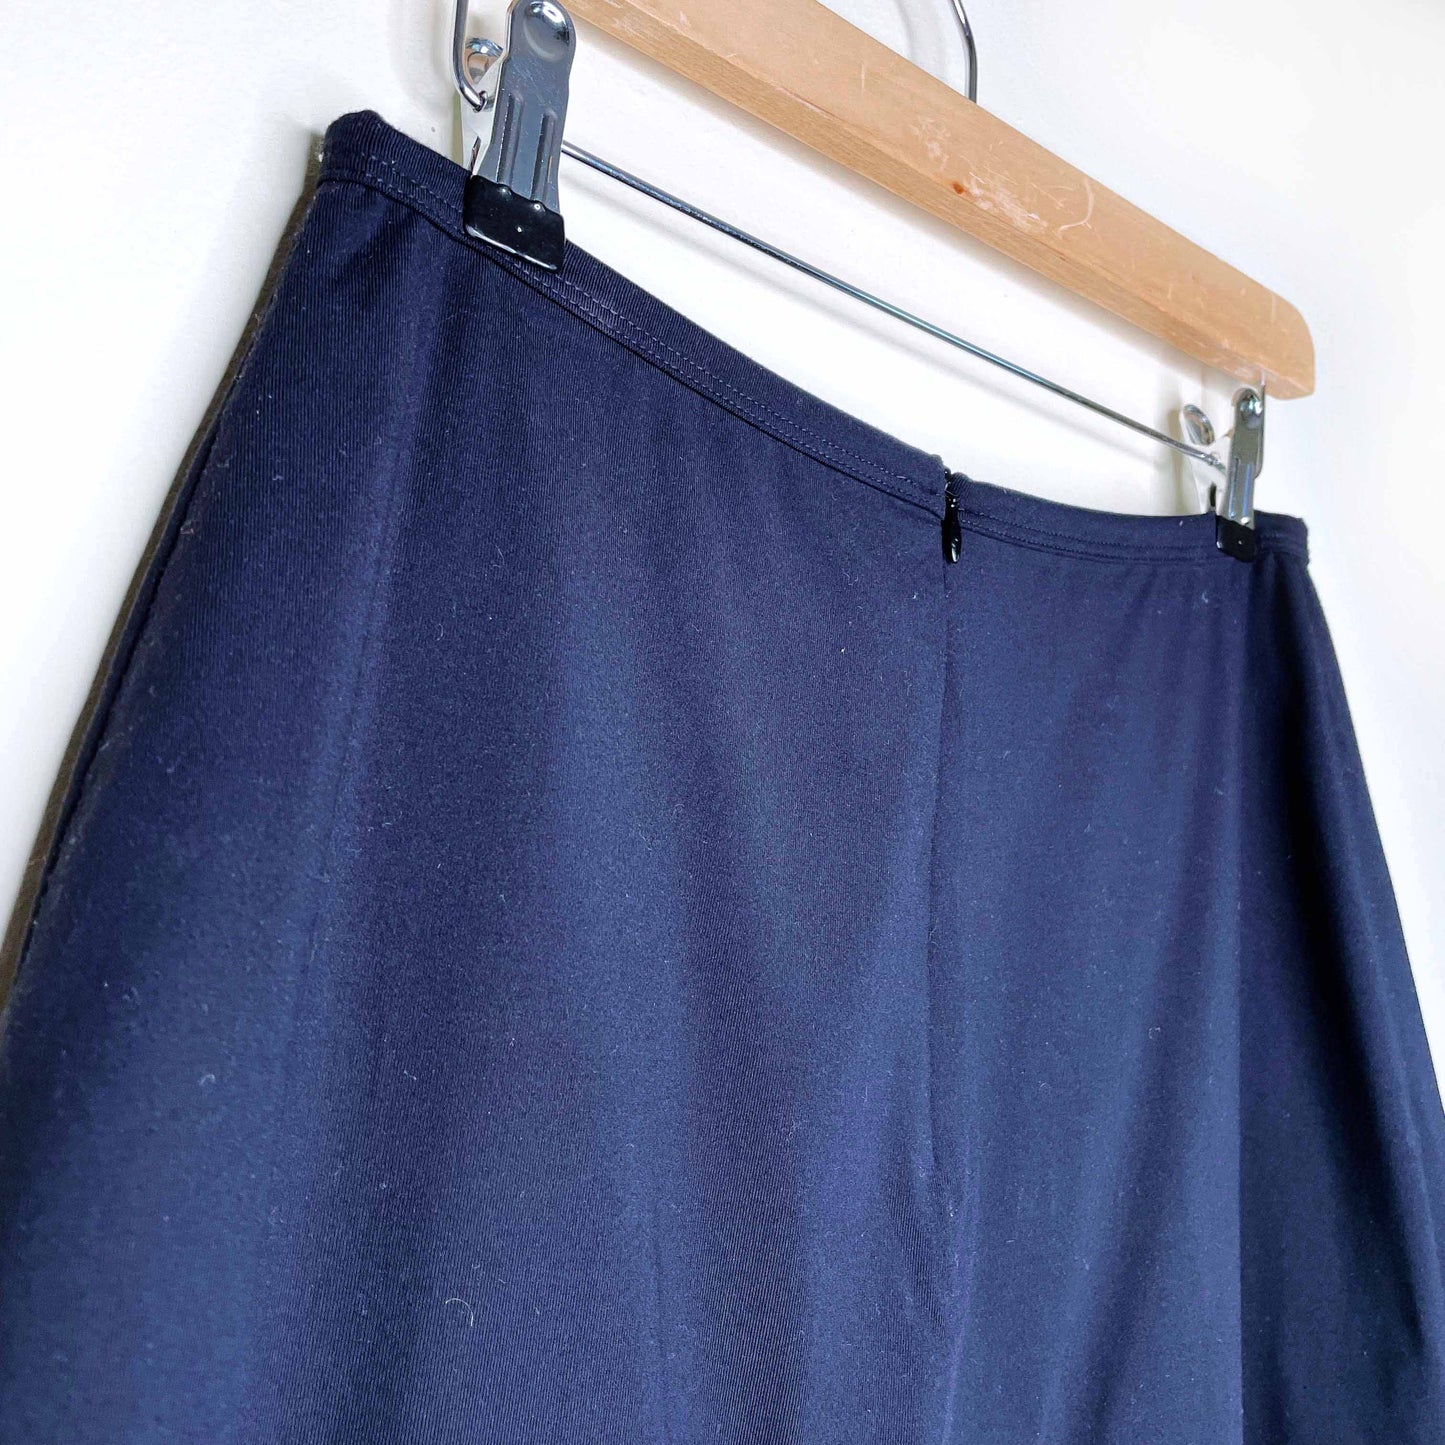 fendi black y2k jersey pocket mini skirt - size 44